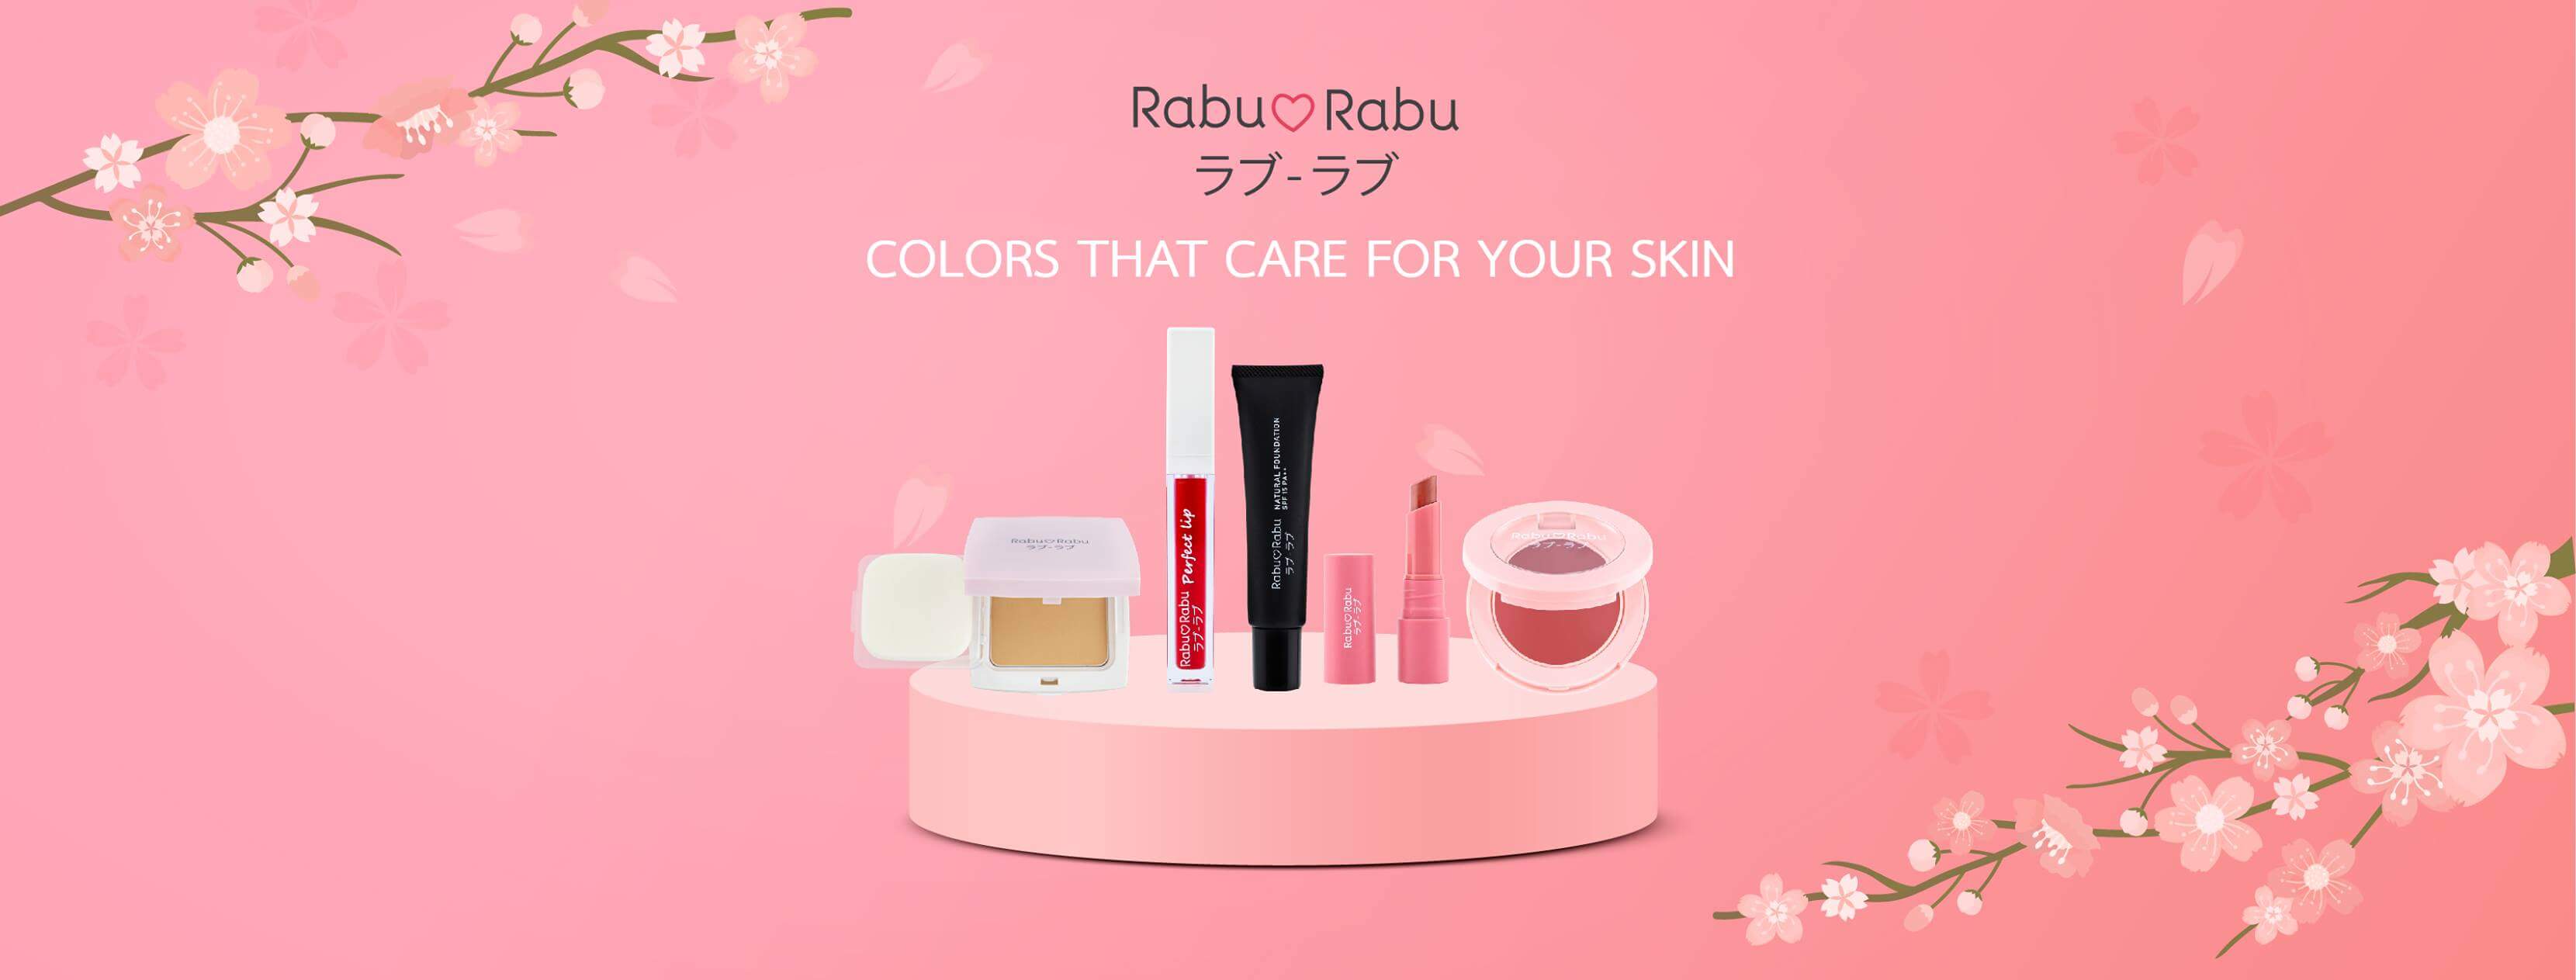 Rabu Rabu, Natural Look Cream Blush,Blush,บลัชออน,Rabu Rabu Natural Look Cream Blush,บลัช